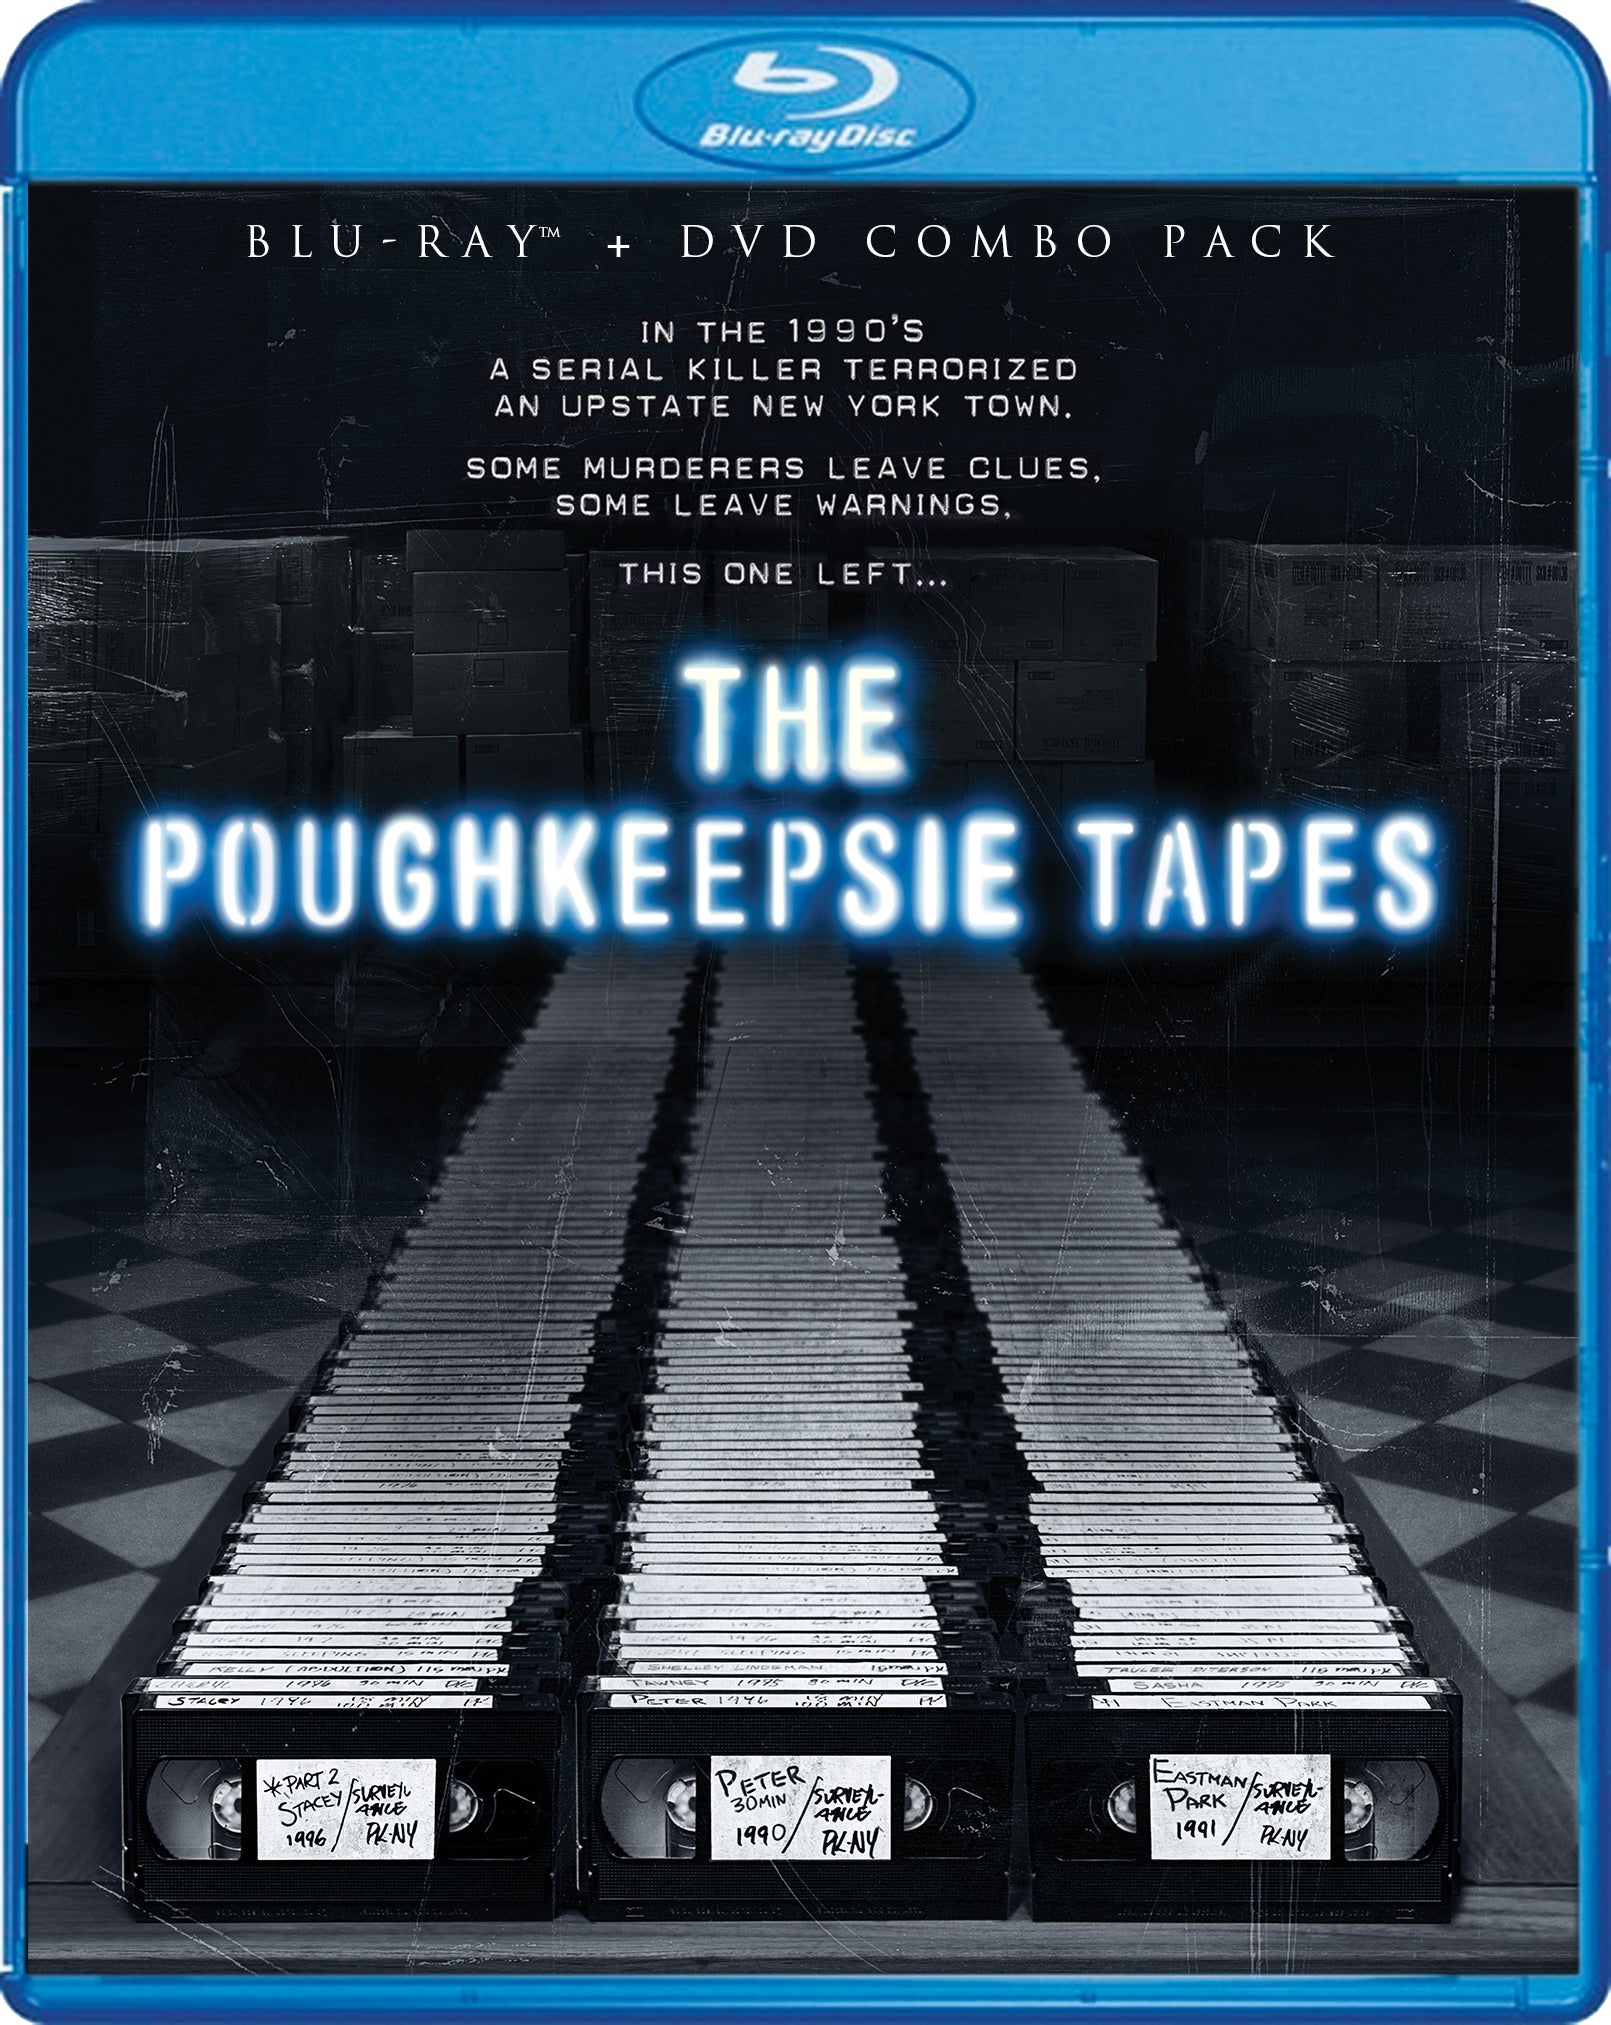 Poughkeepsie Tapes [Blu-ray/DVD] [2 Discs] cover art